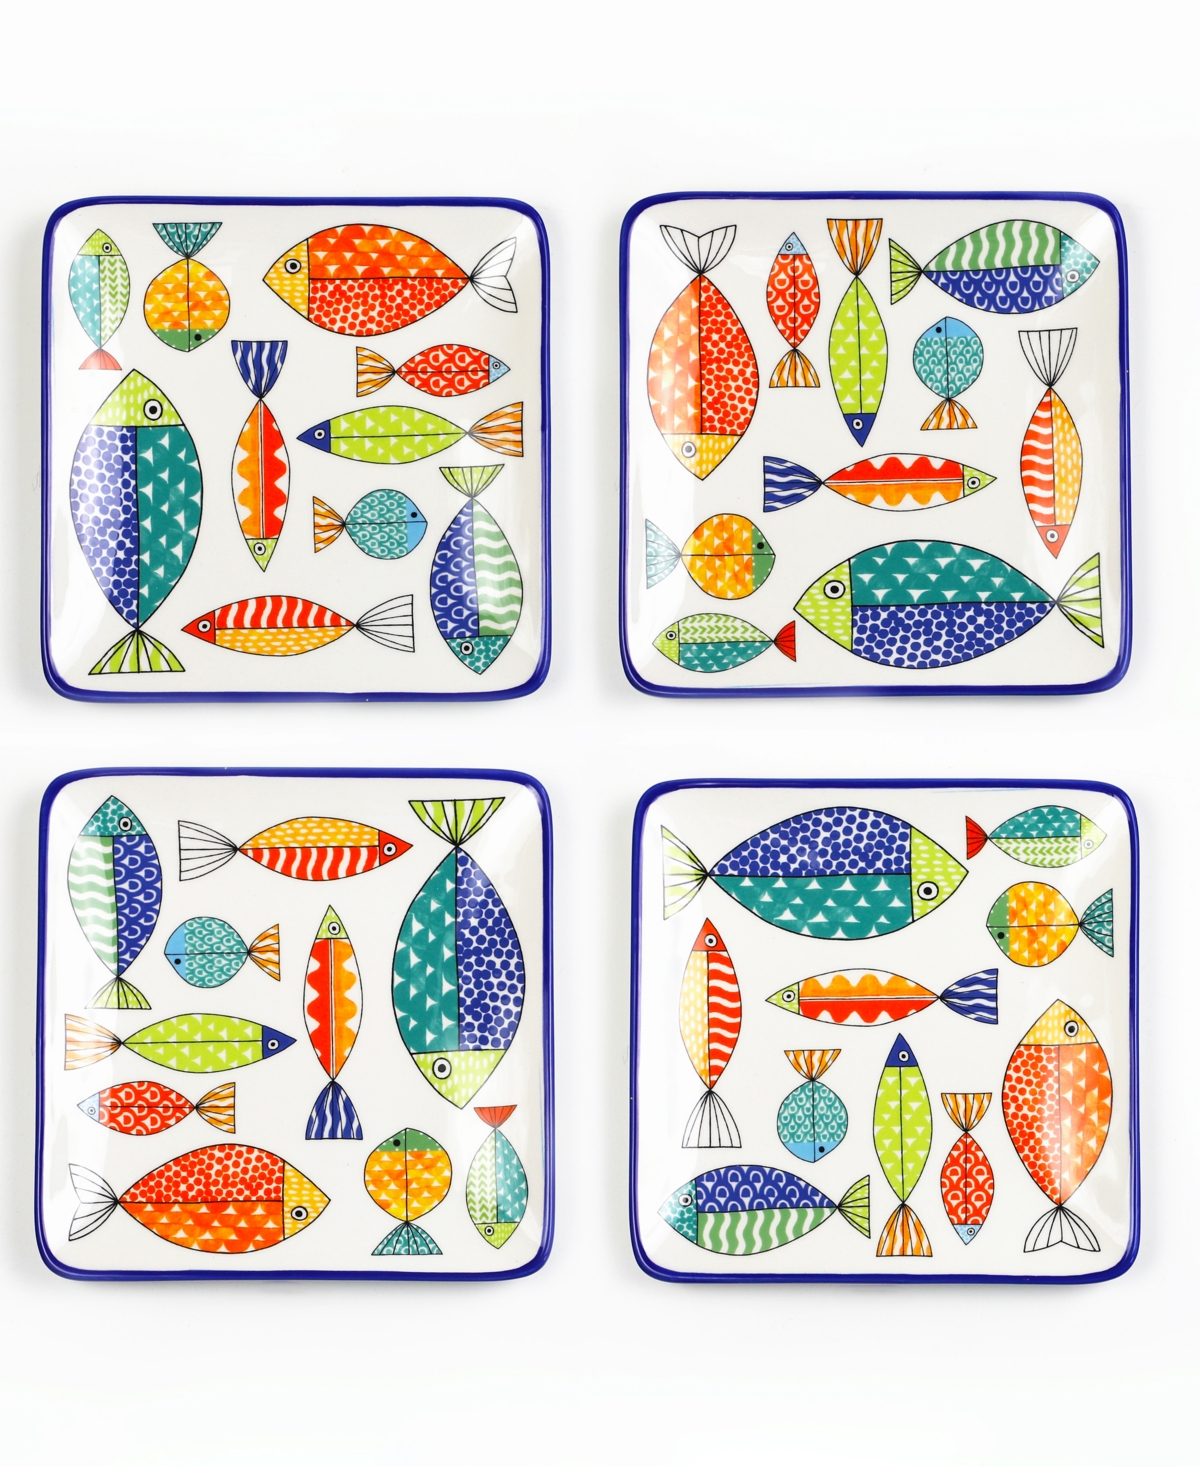 Freshcatch Canape Plates Set, 4 Piece - White and Multicolor